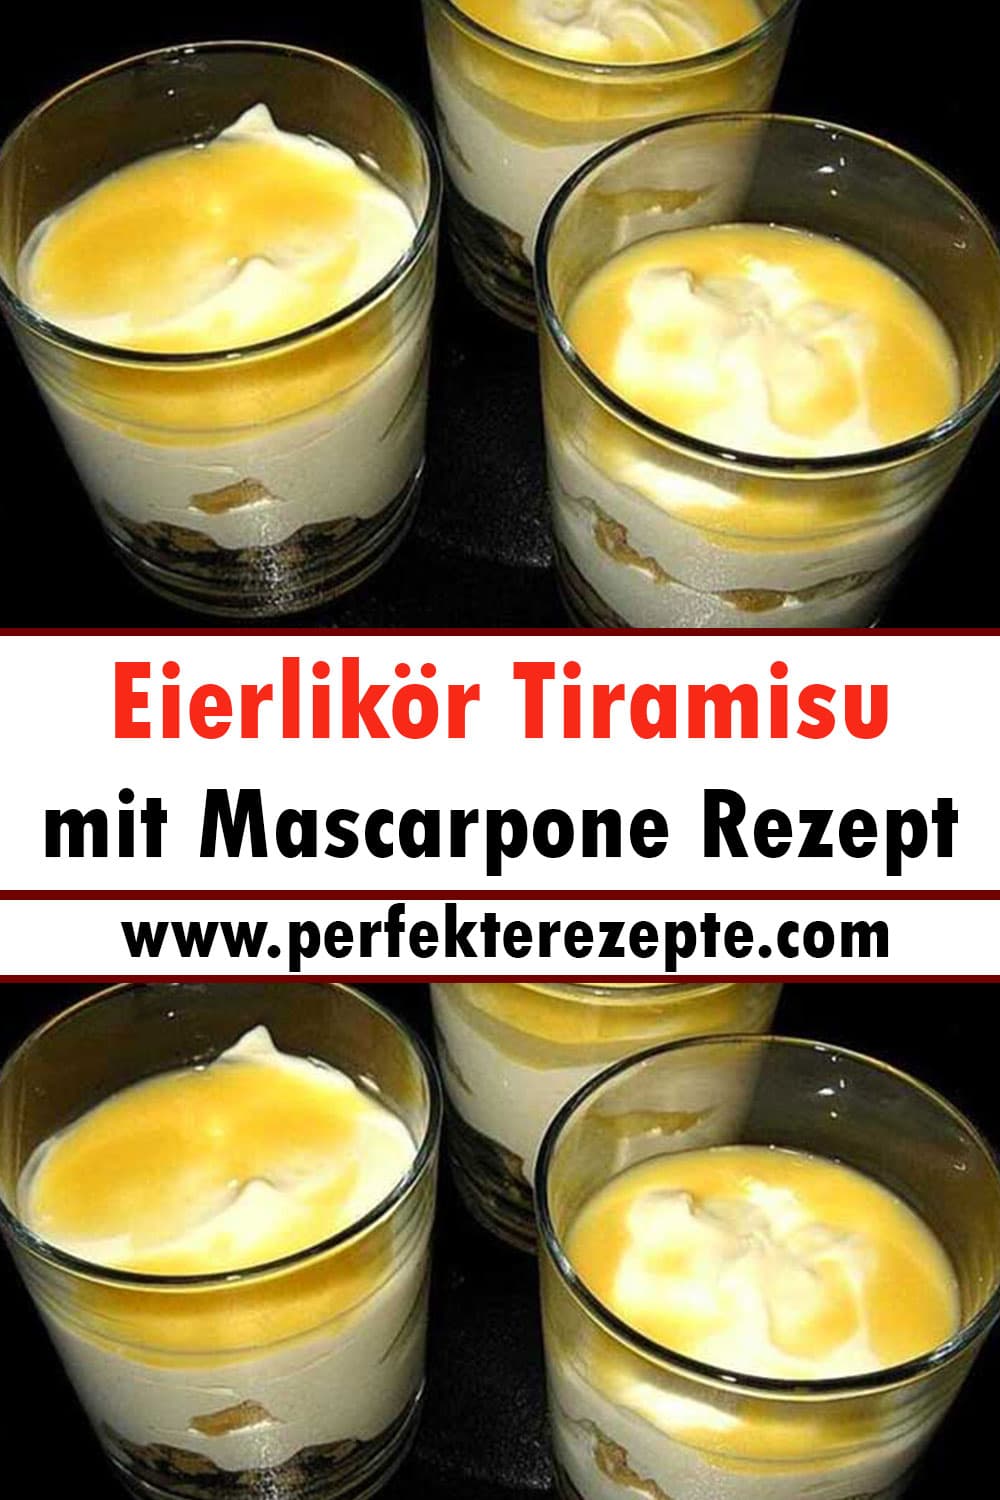 Eierlikör Tiramisu mit Mascarpone Rezept